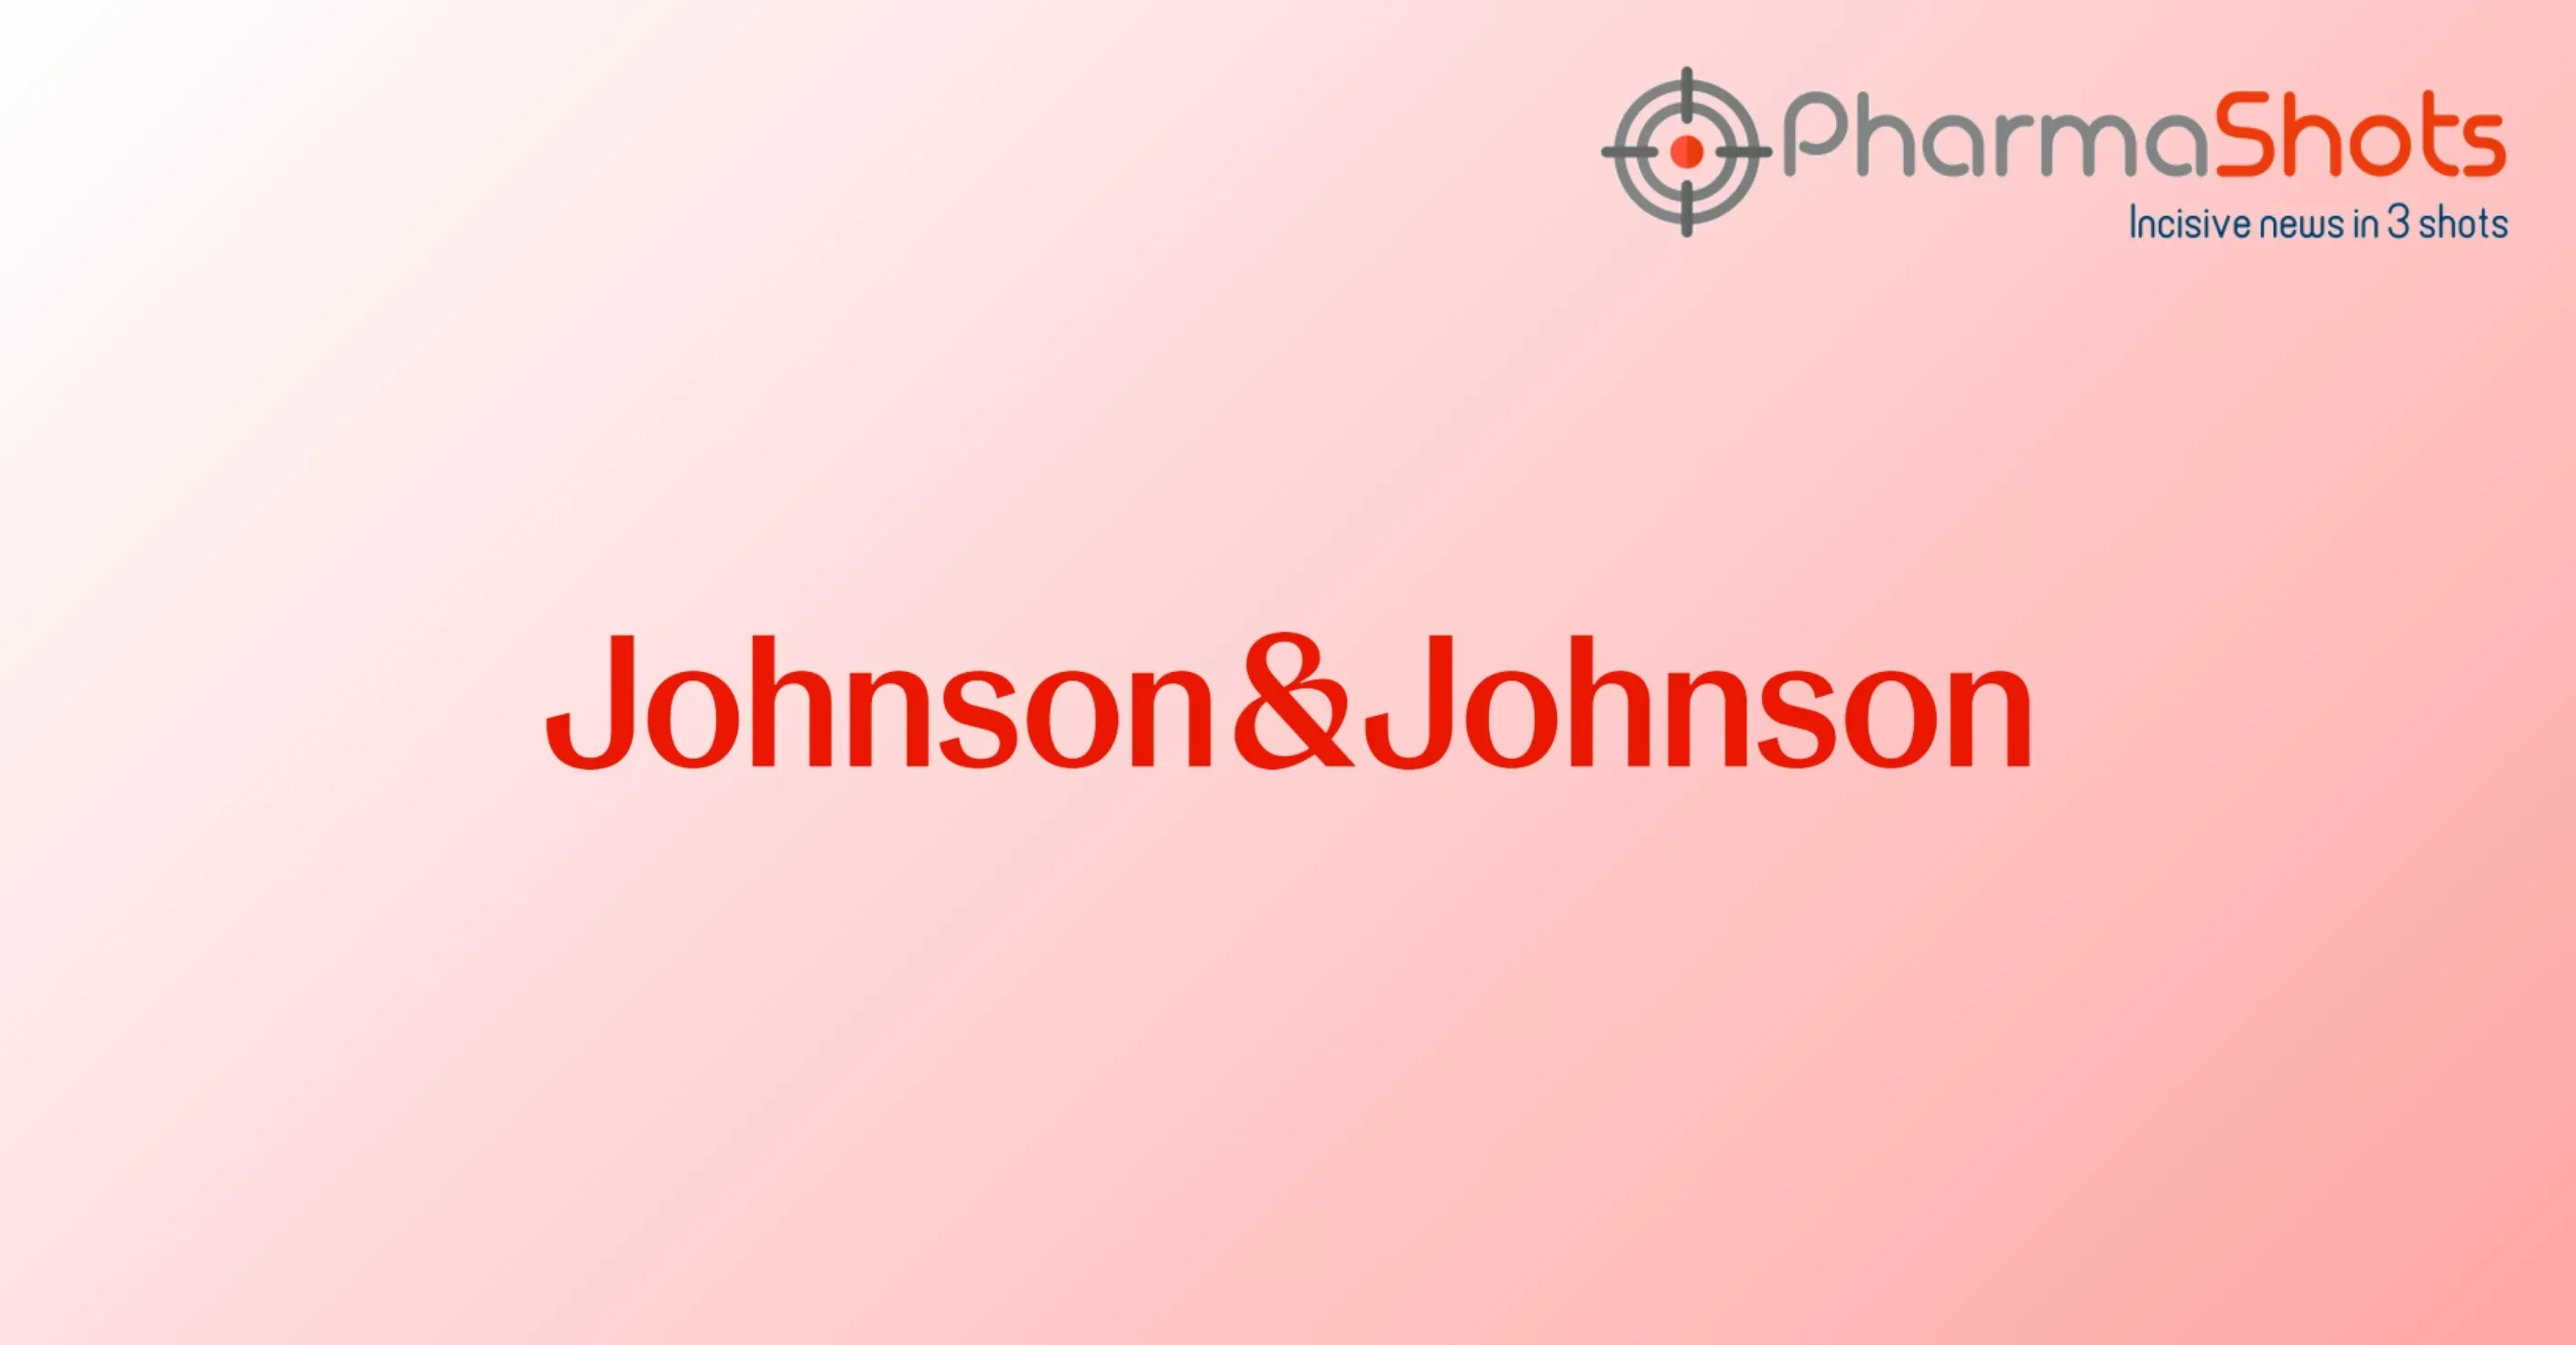 Johnson & Johnson’s Opsynvi (macitentan and tadalafil) Receives the US FDA’s Approval for the Treatment of Pulmonary Arterial Hypertension